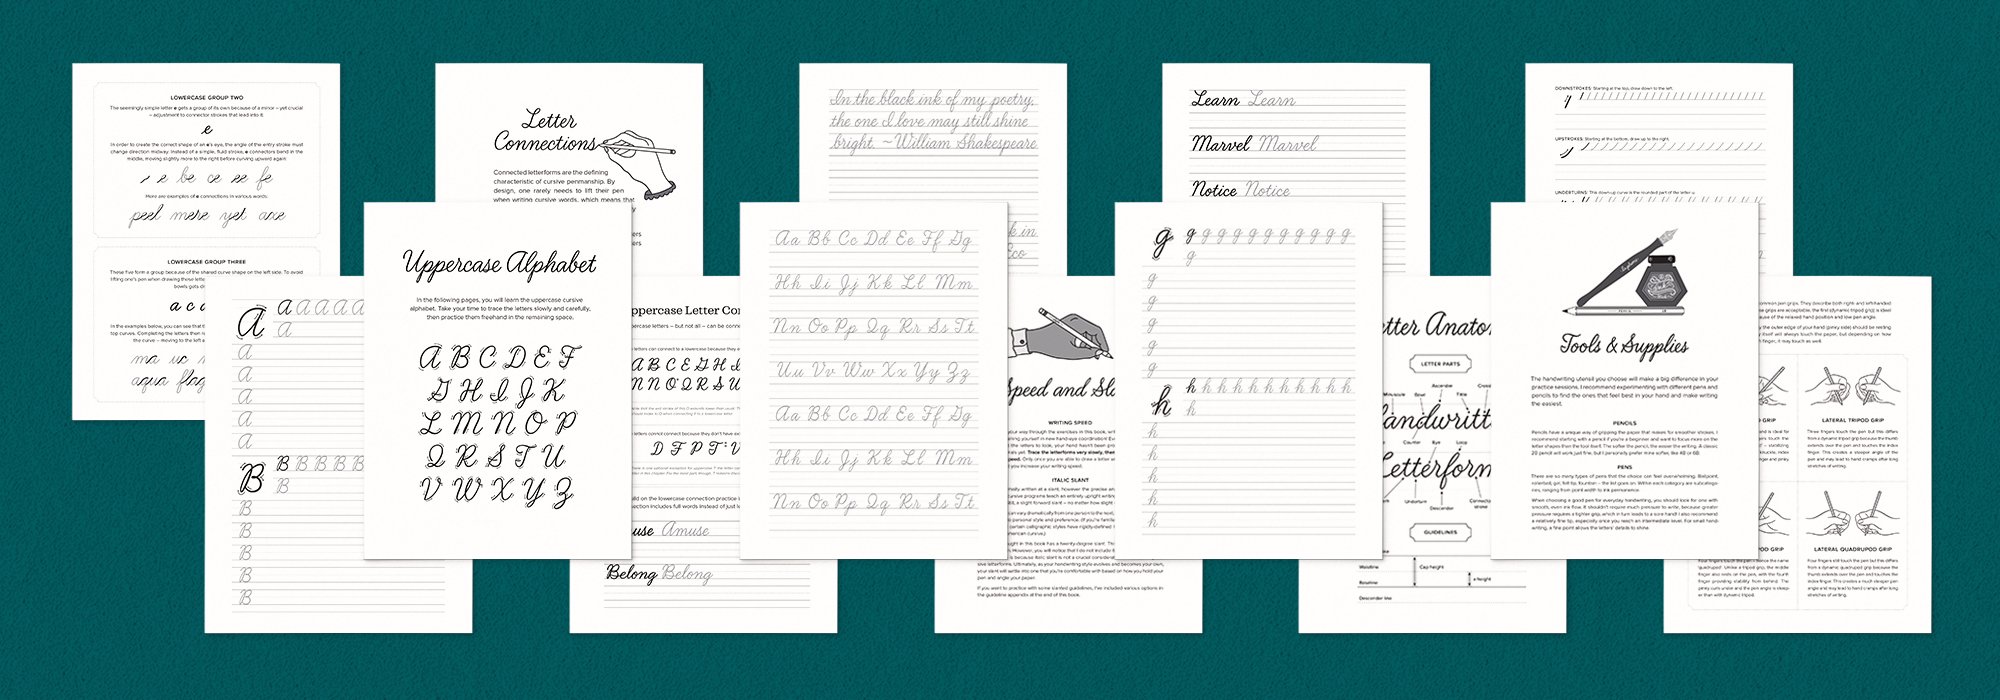 Modern Cursive Handwriting – Printable PDF Edition